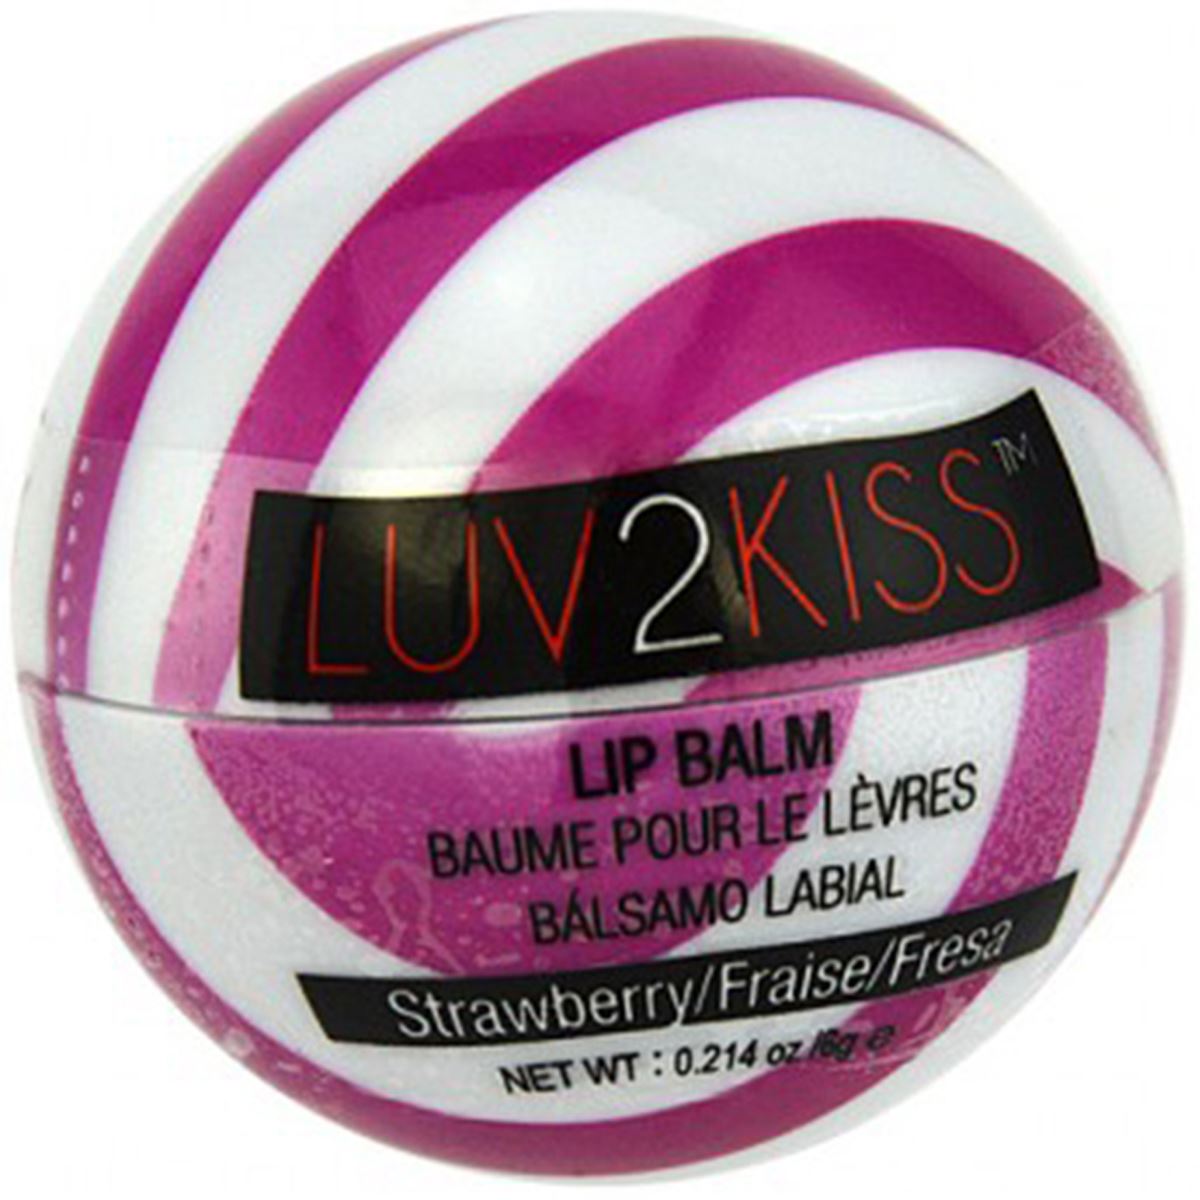 Luv2Kiss &#45; Lip Balm &#45; Strawberry